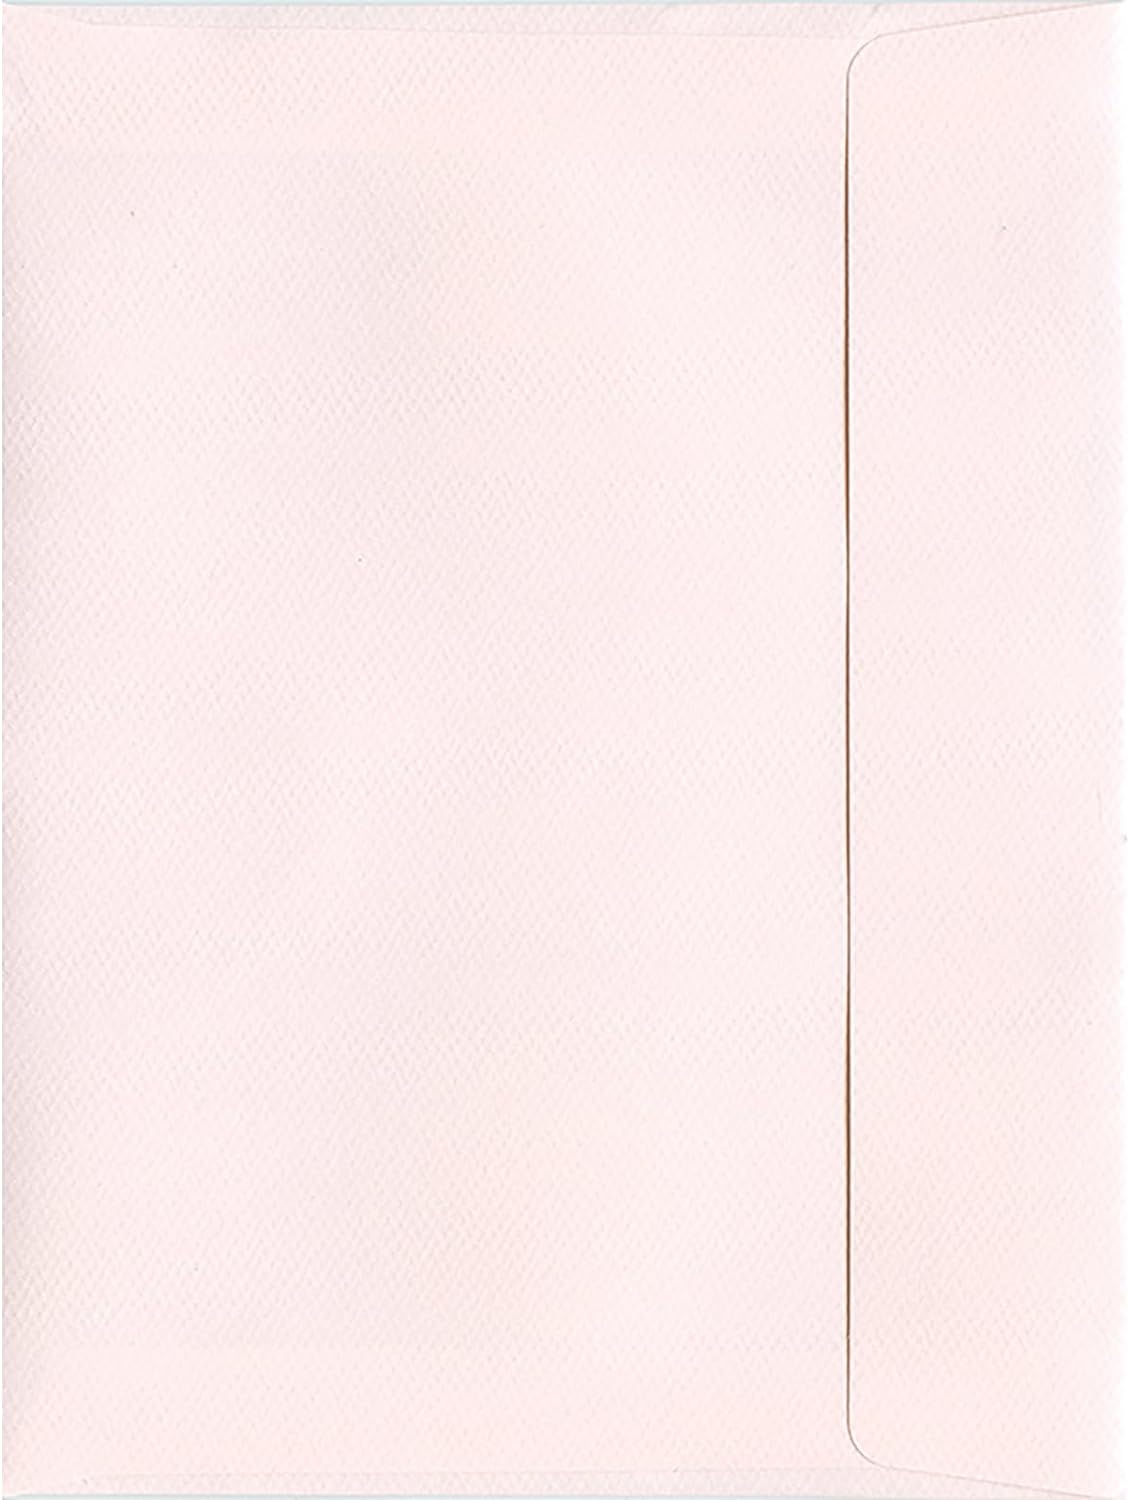 Sanrio Greeting Card: Sakura and Shiba Inu